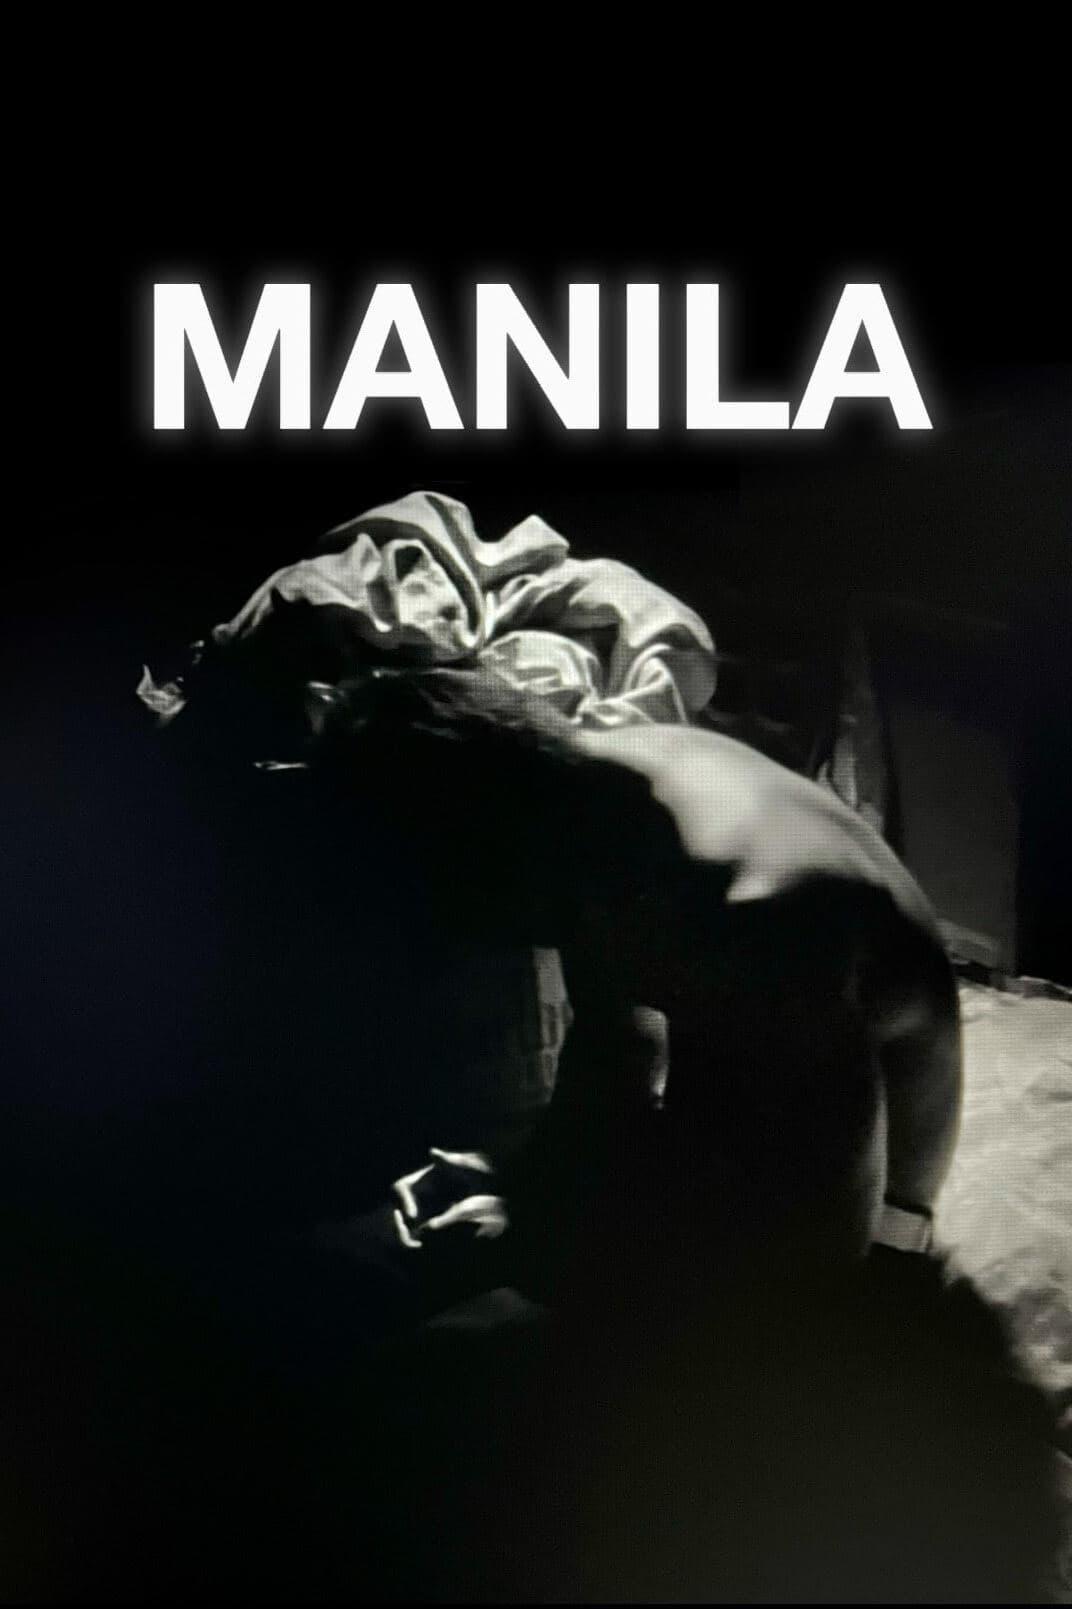 Manila poster